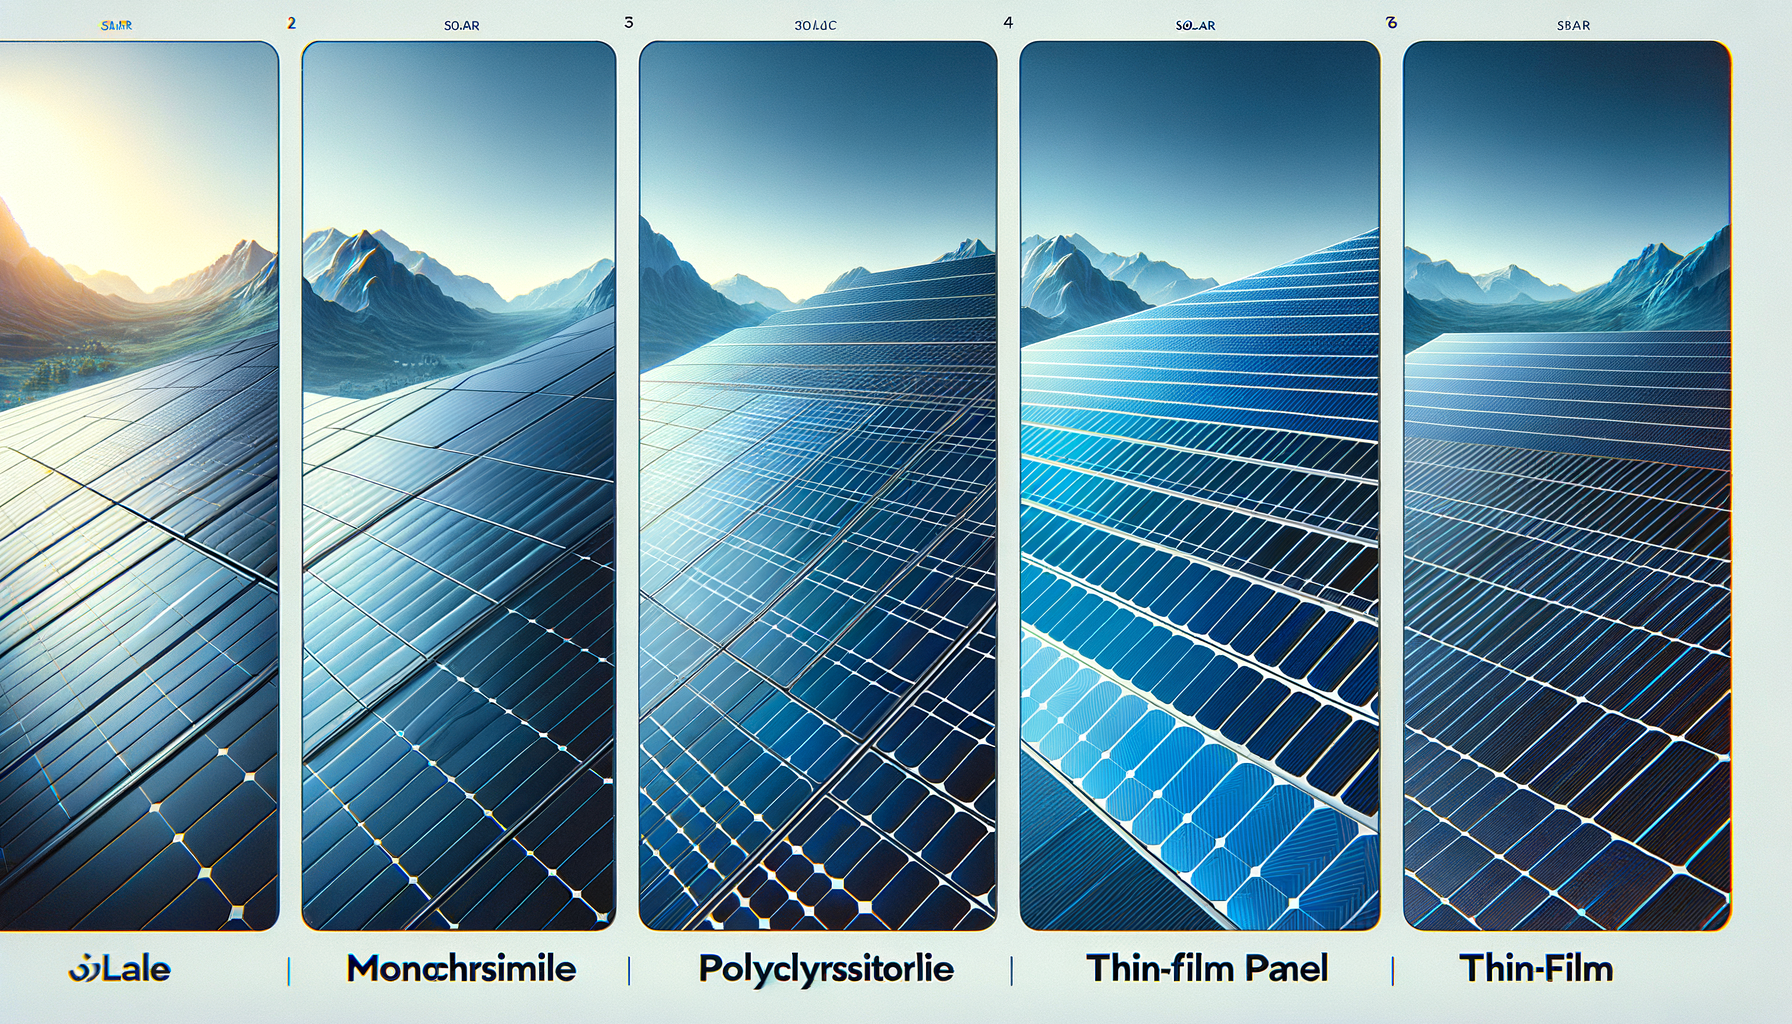 ALT: Different types of solar panels